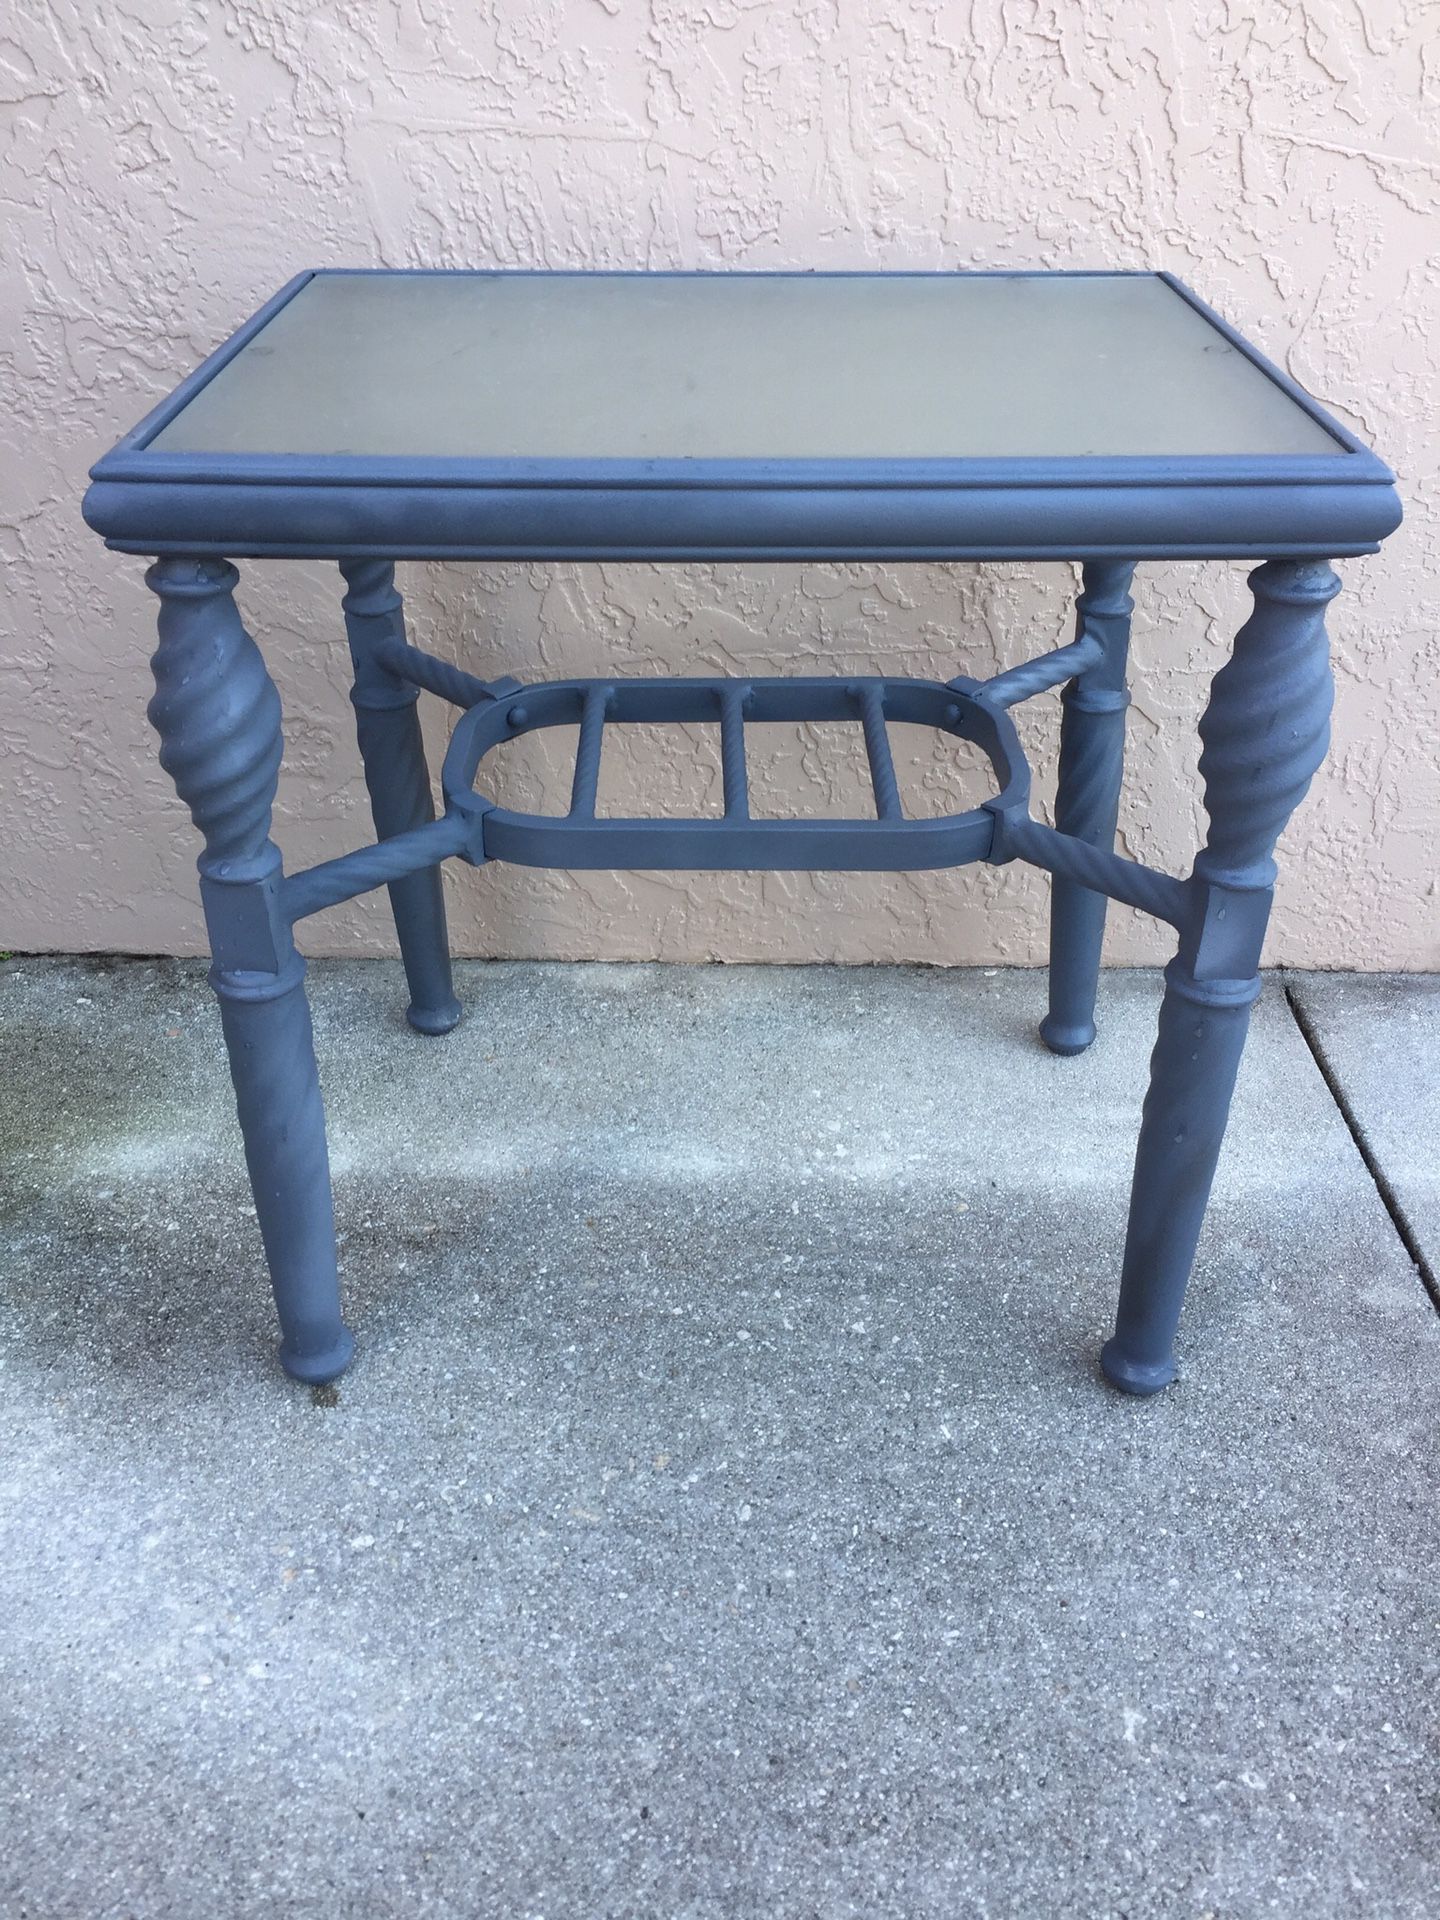 Outdoor garden patio furniture side end table gray